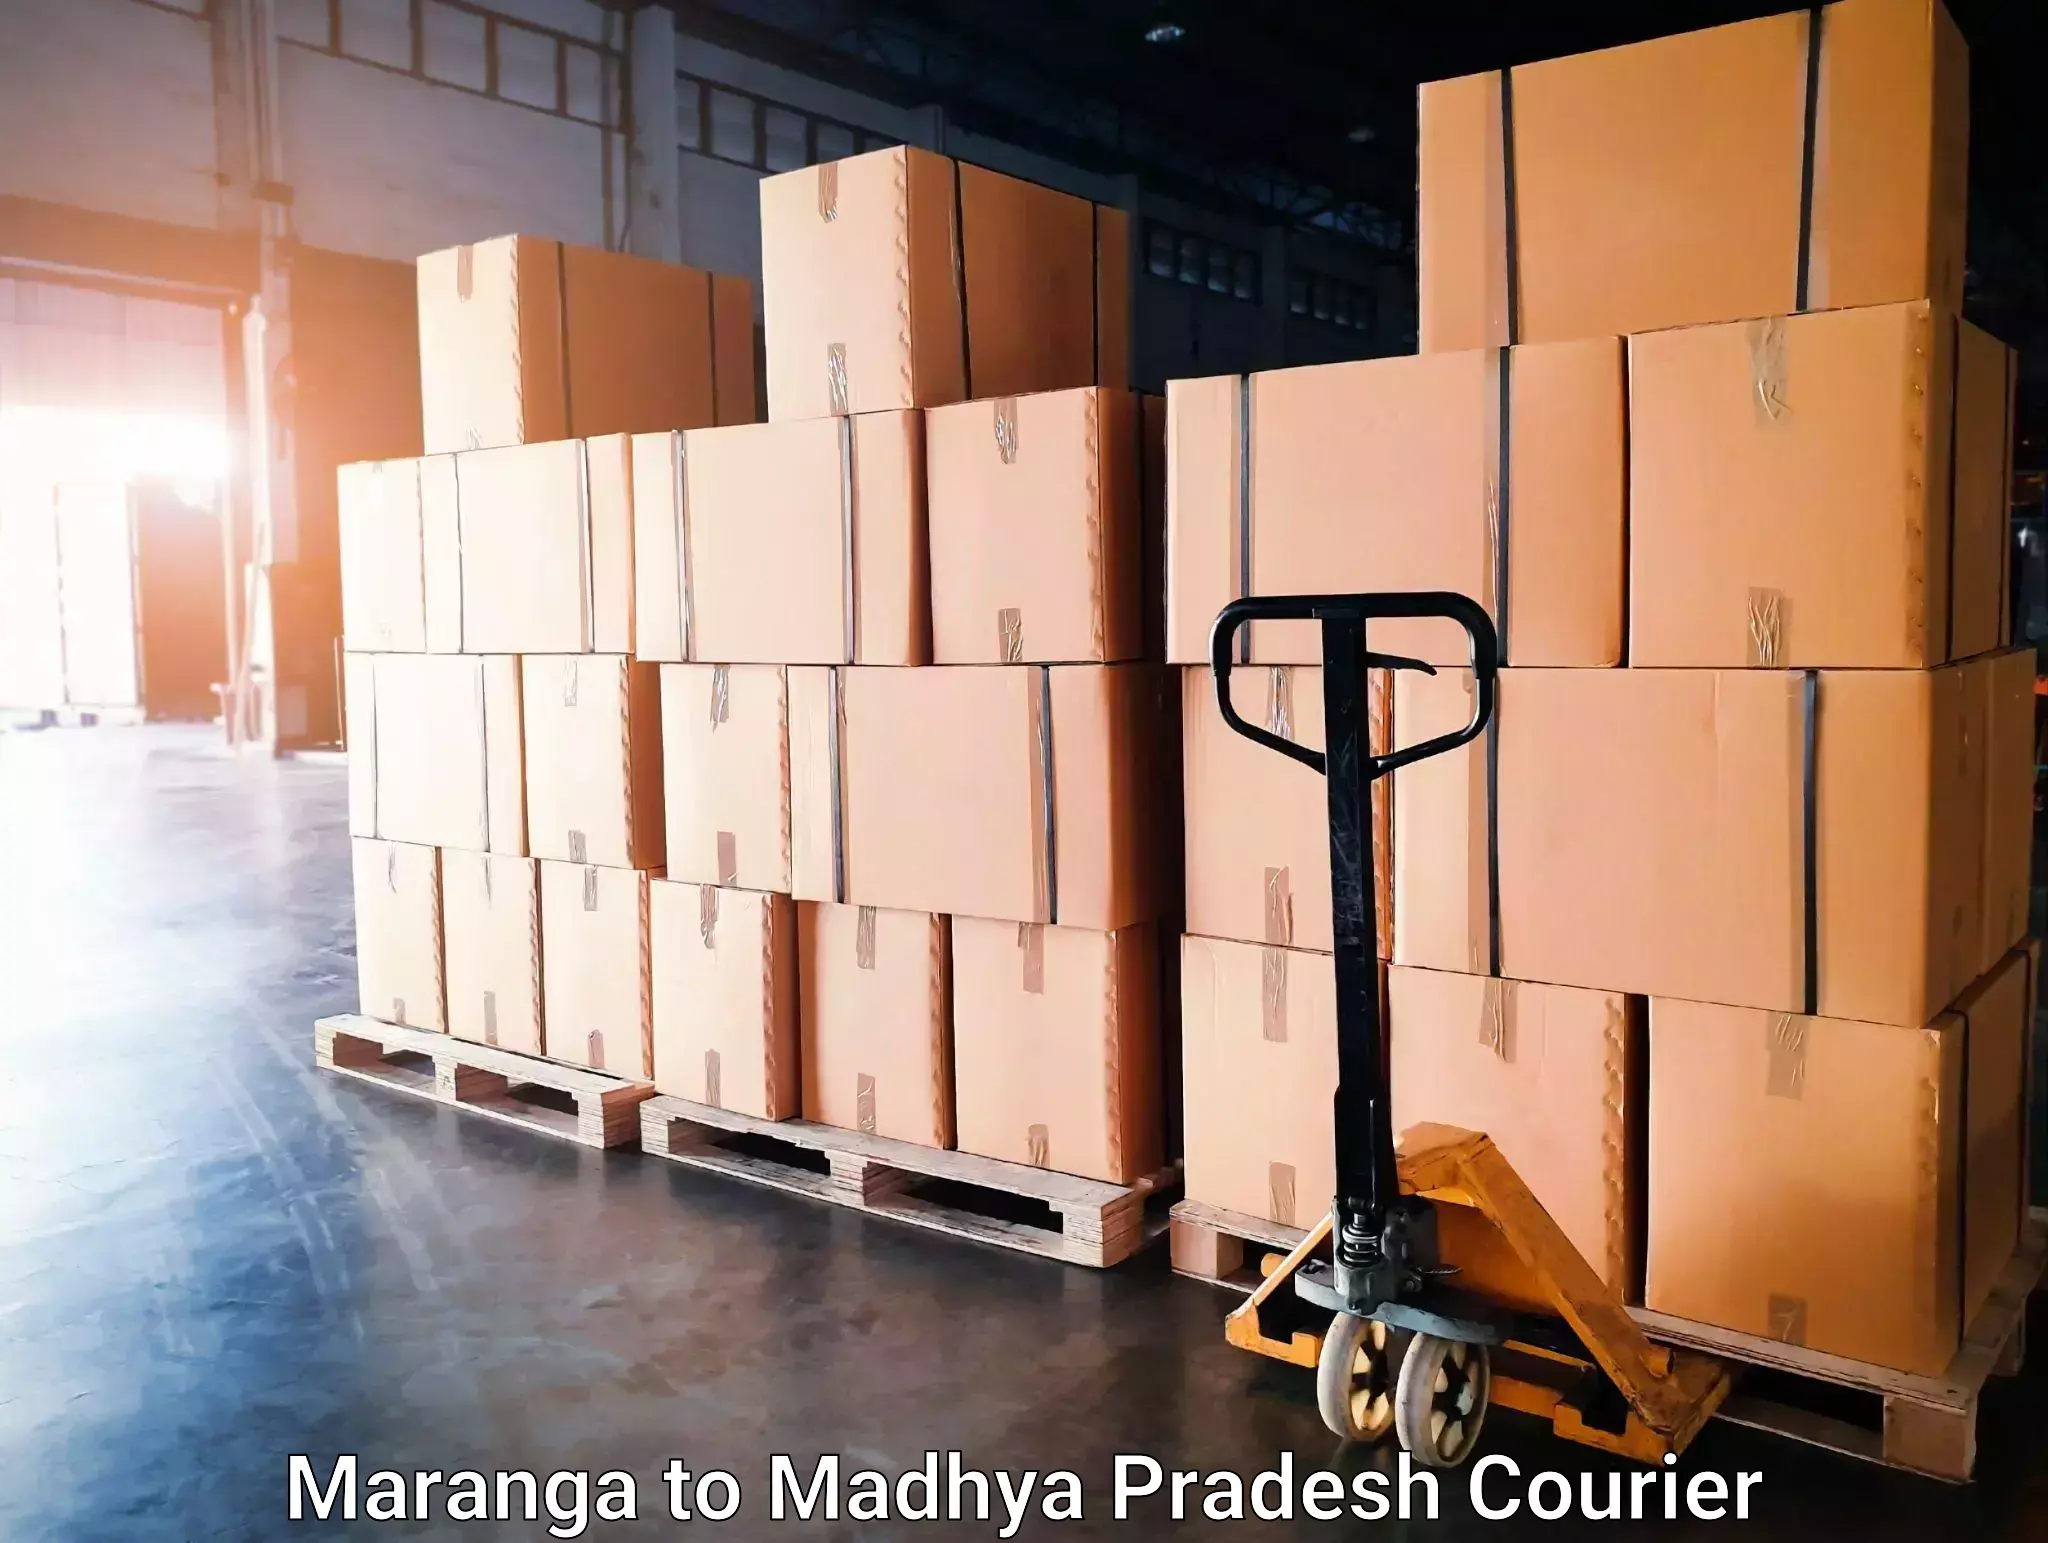 Seamless moving process in Maranga to Madhya Pradesh